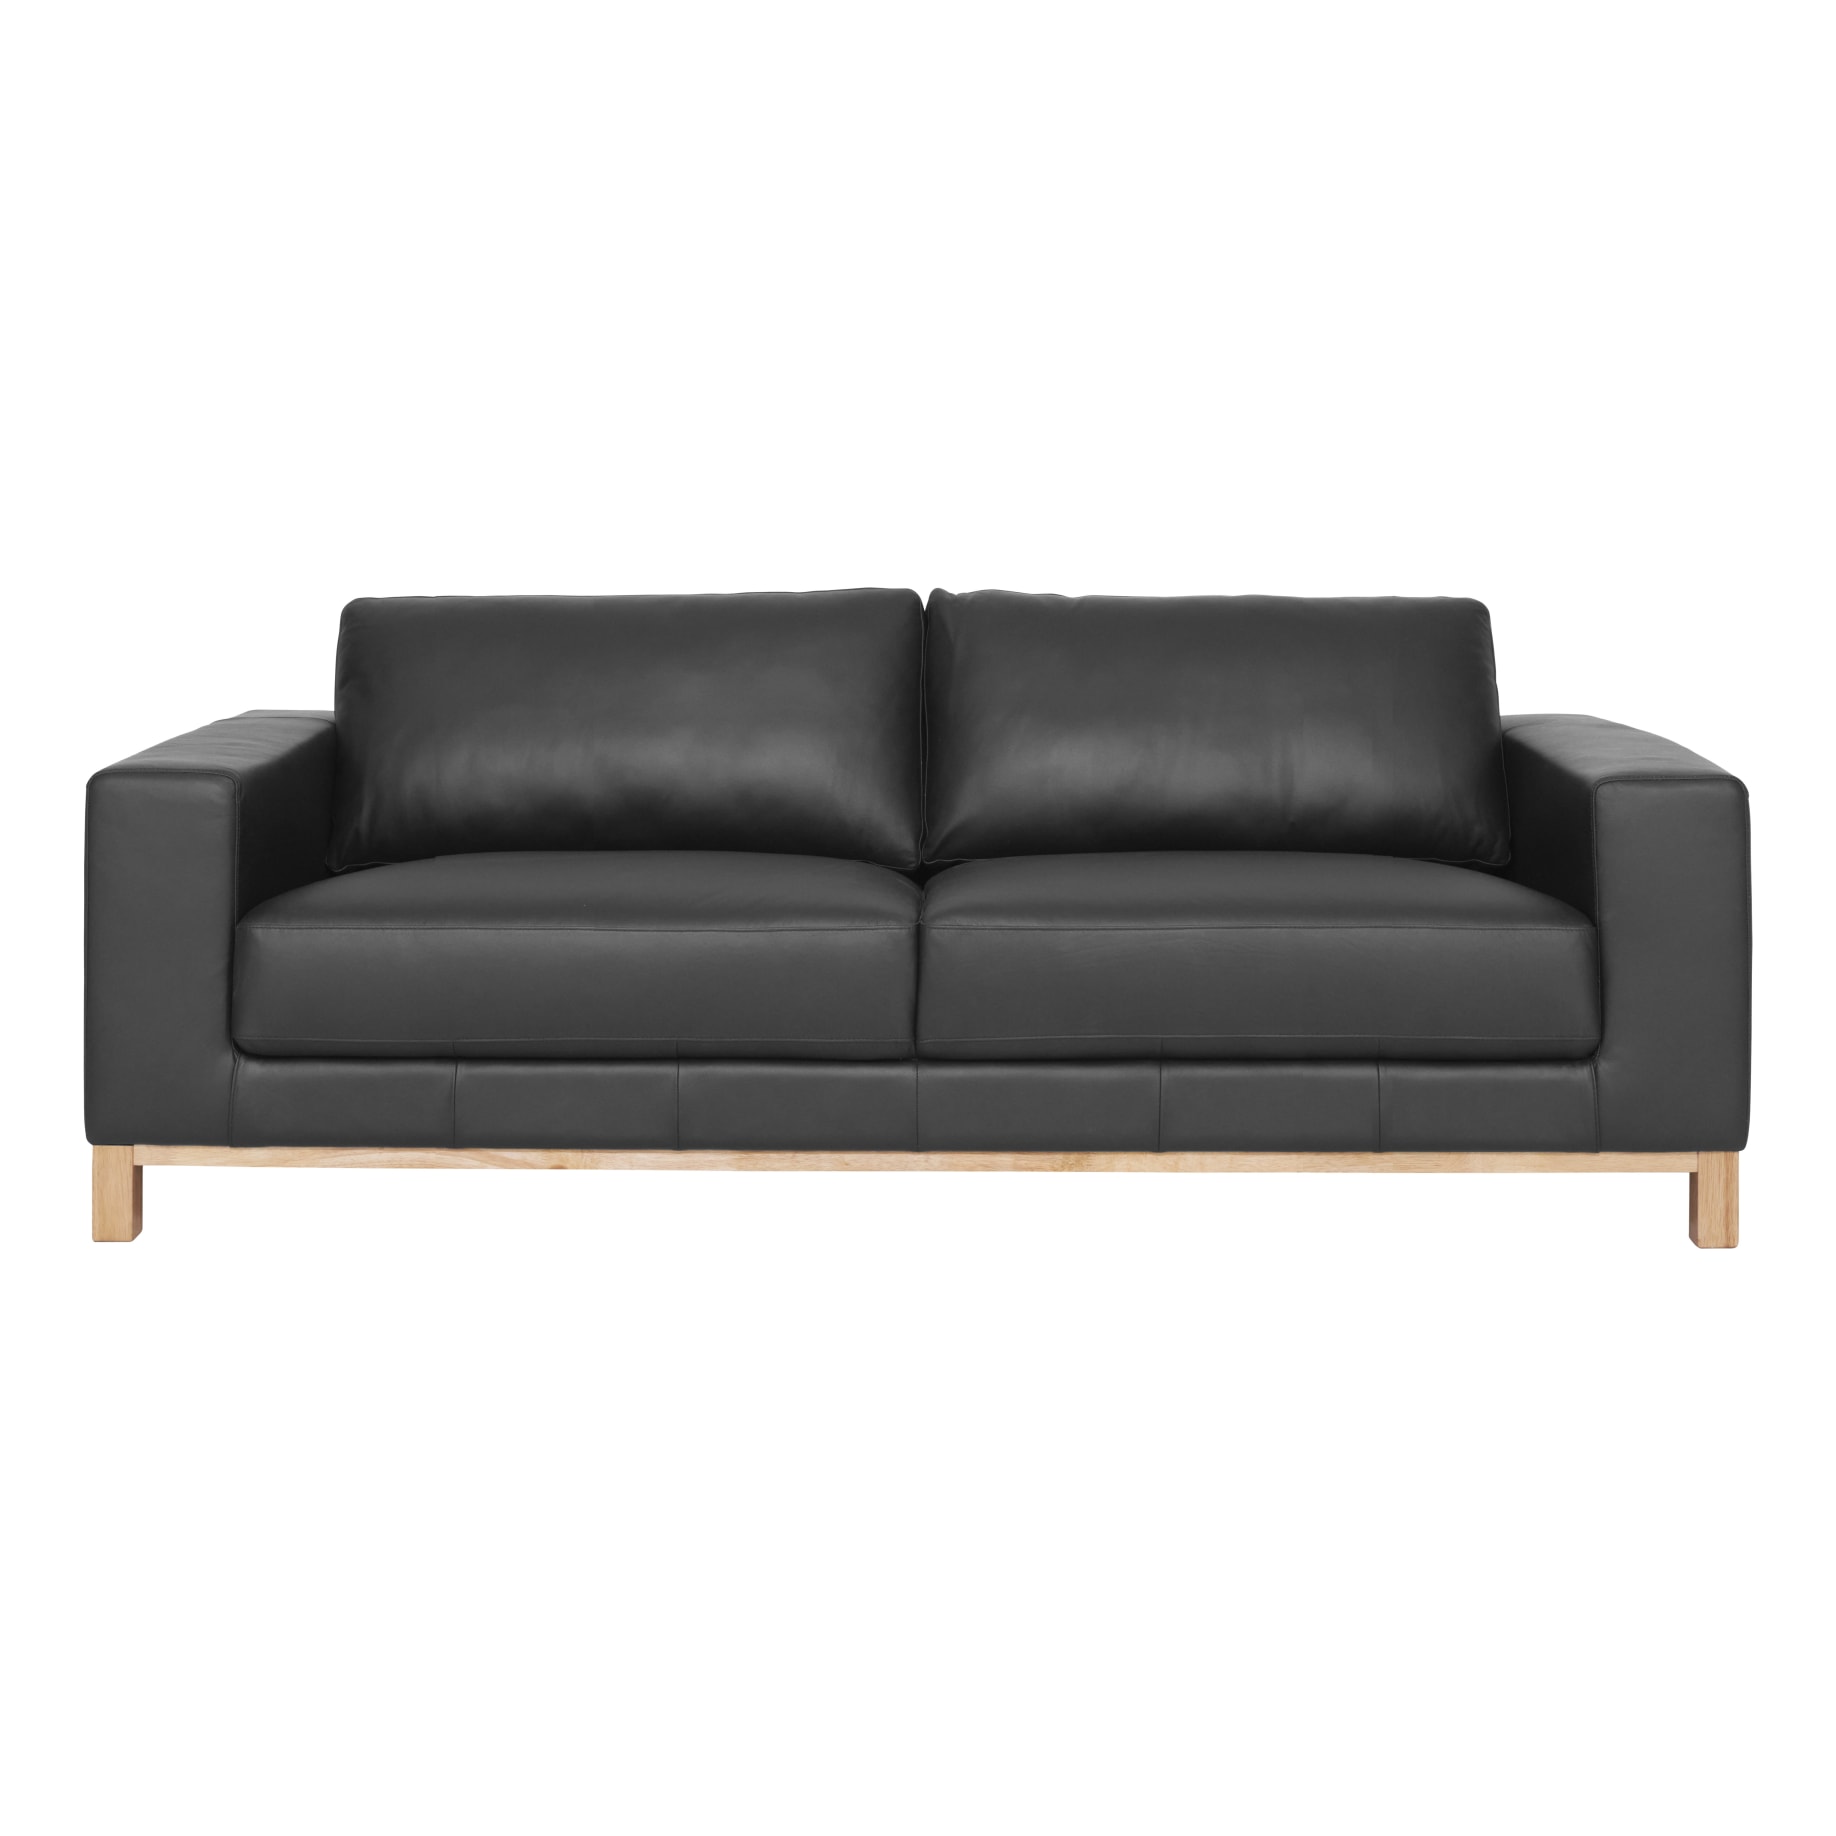 Jasper 2.5 Seater Sofa in Linea Leather Charcoal